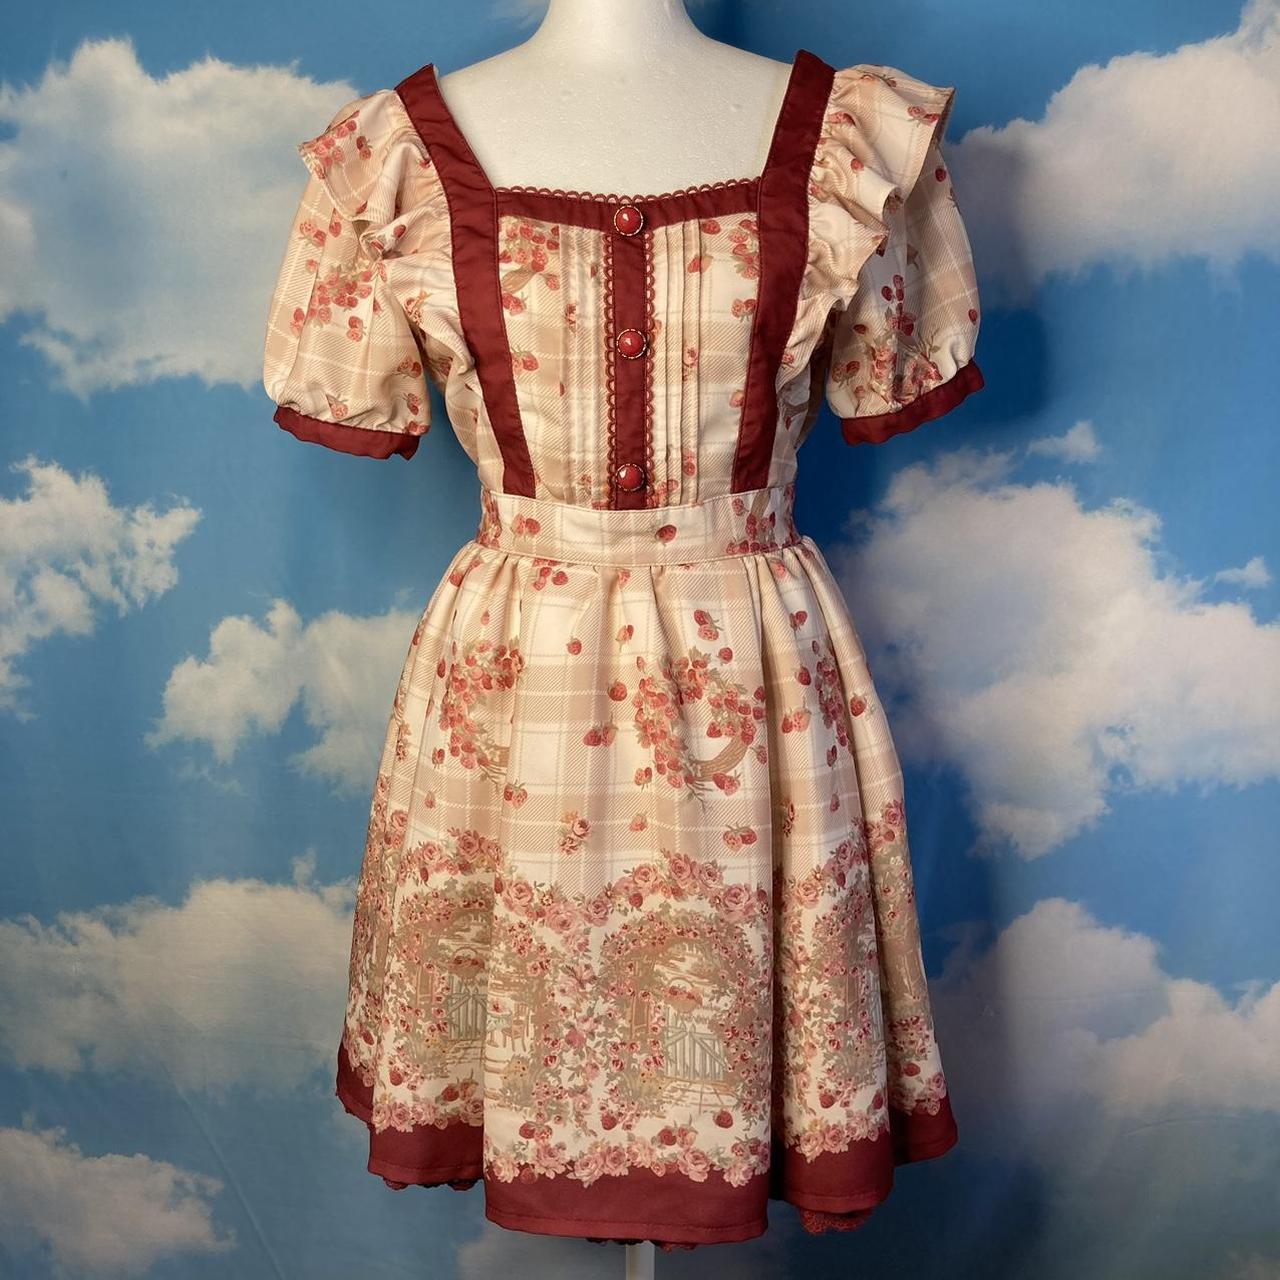 Liz Lisa Lost Strawberry Gardens Picnic Dress This... - Depop